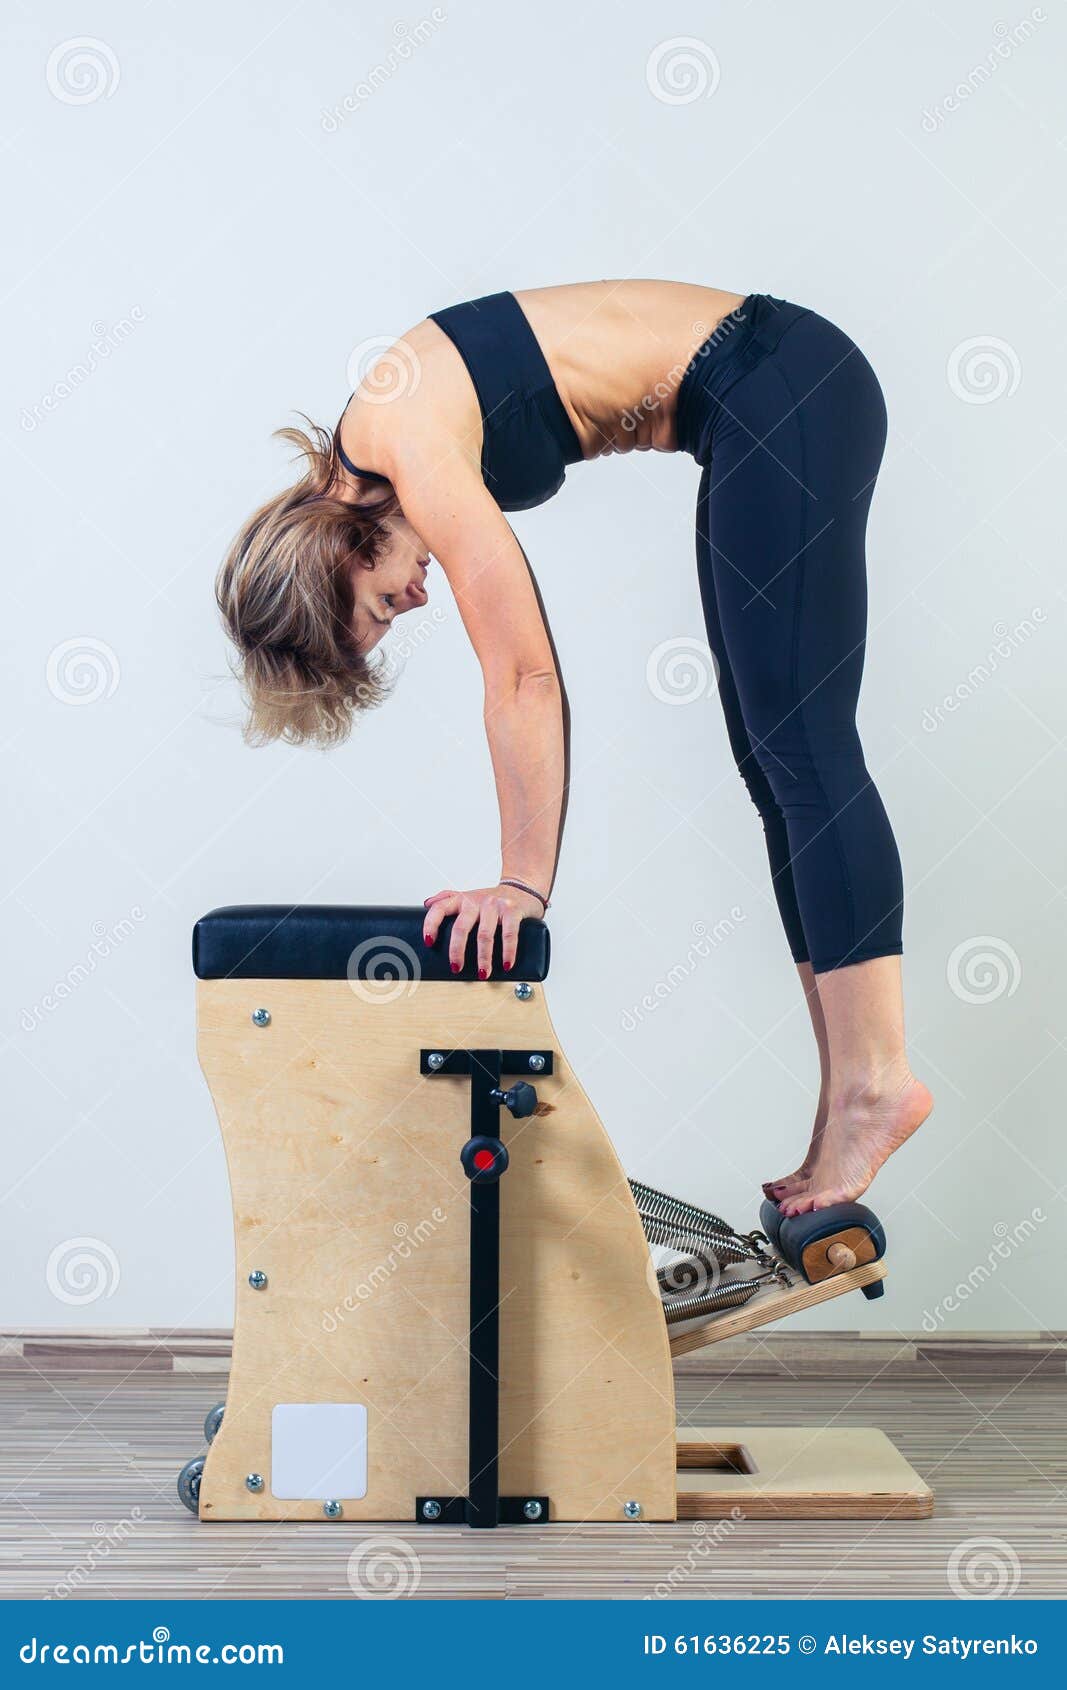 Combo Wunda Pilates Chair Woman Fitness Yoga Gym Stock Image - Image of ...